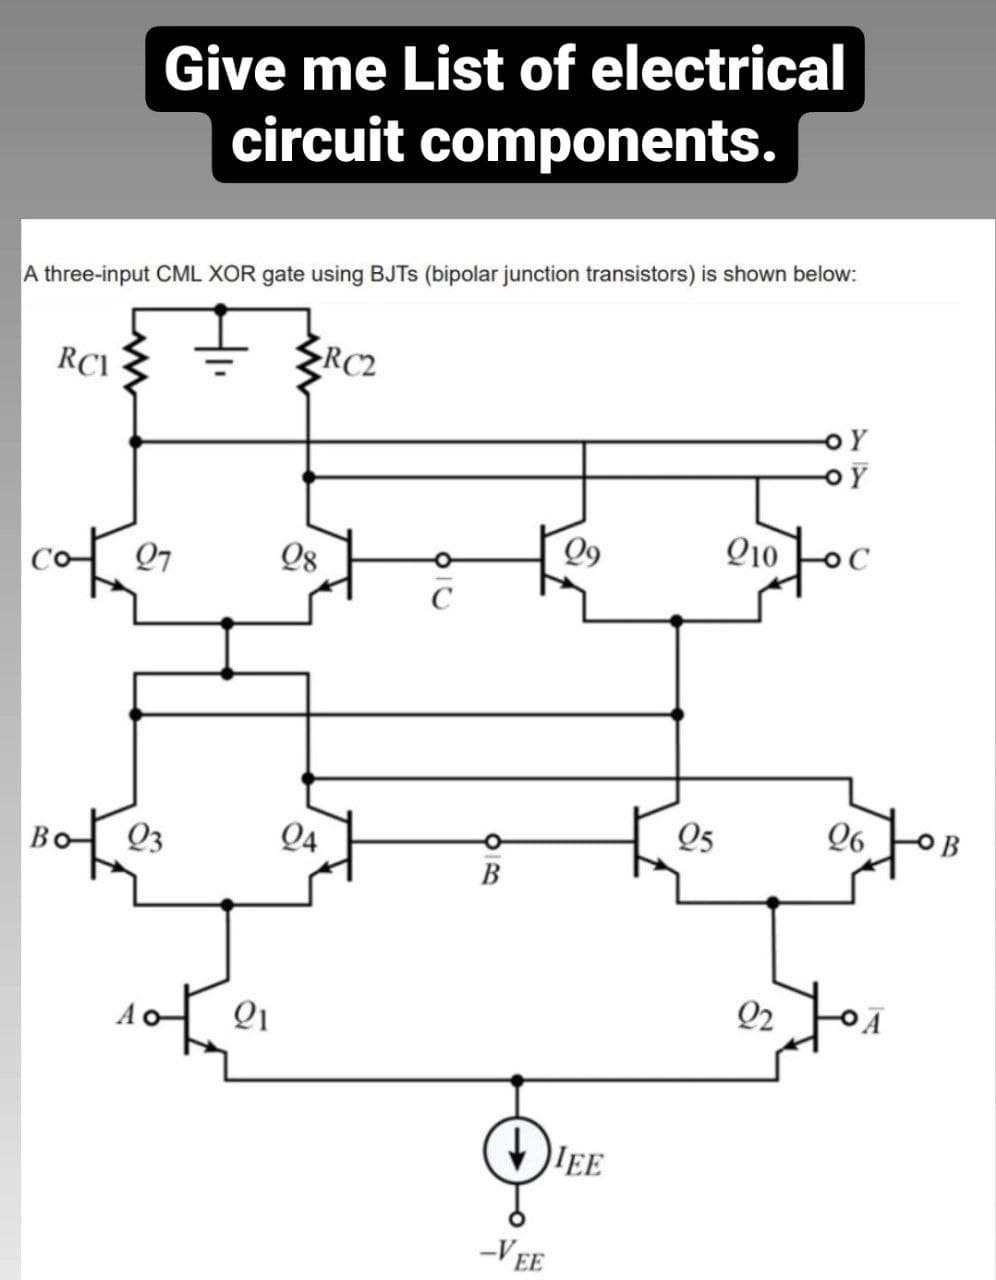 Give me List of electrical
circuit components.
A three-input CML XOR gate using BJTS (bipolar junction transistors) is shown below:
RC2
RCI
Q9
Q10
Q7
Q8
C
Q5
Q6 OB
Q3
Q4
В
Q2
Qi
IEE
-VEE
